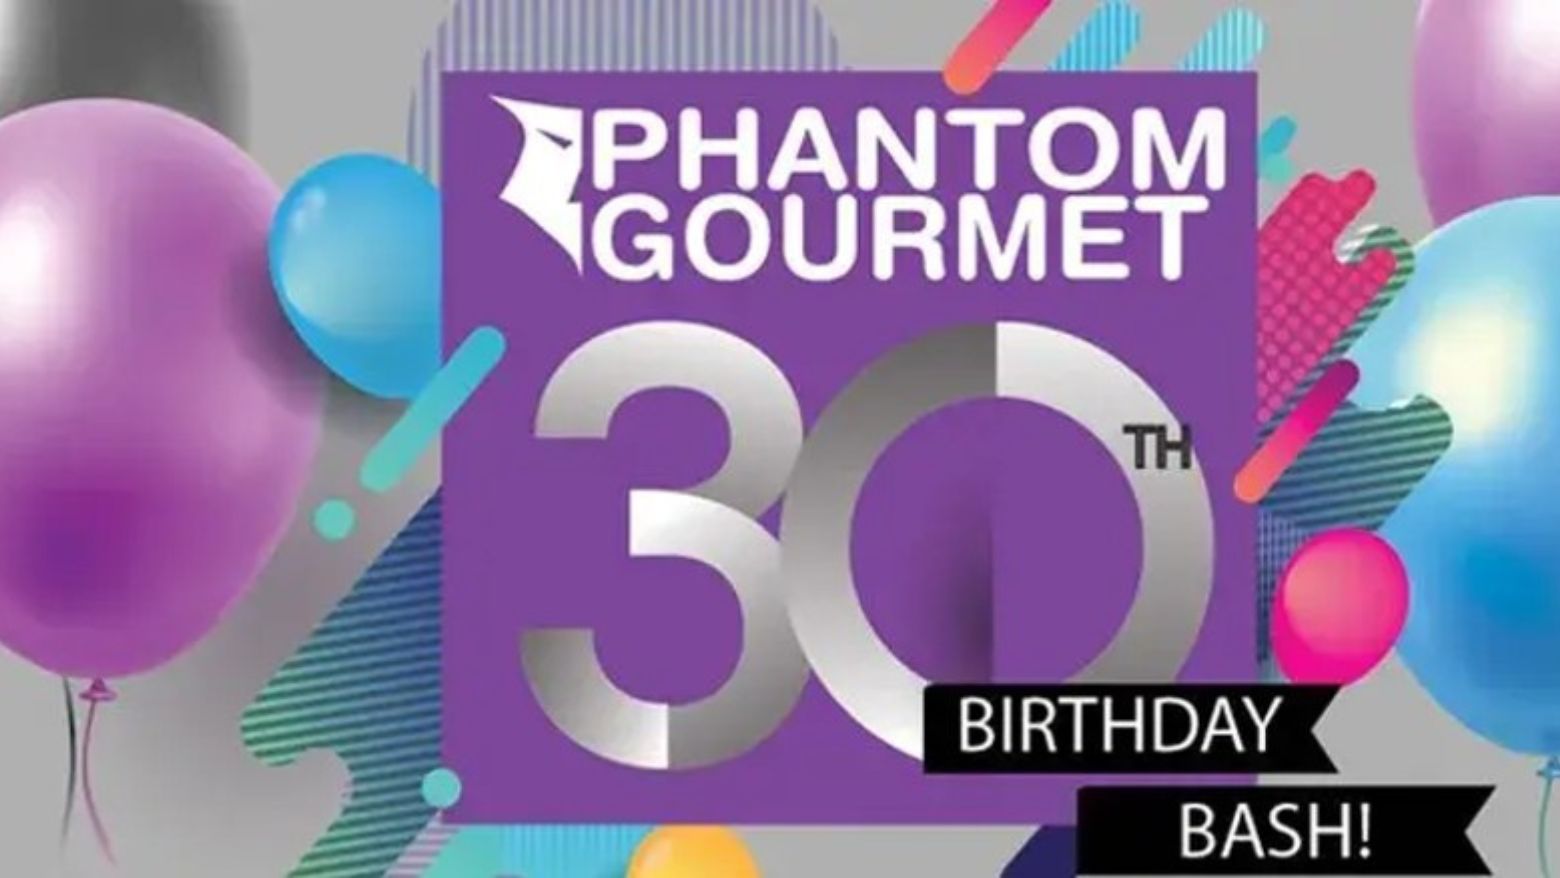 Phantom Gourmet’s 30th Anniversary Bash Boston Restaurant News and Events